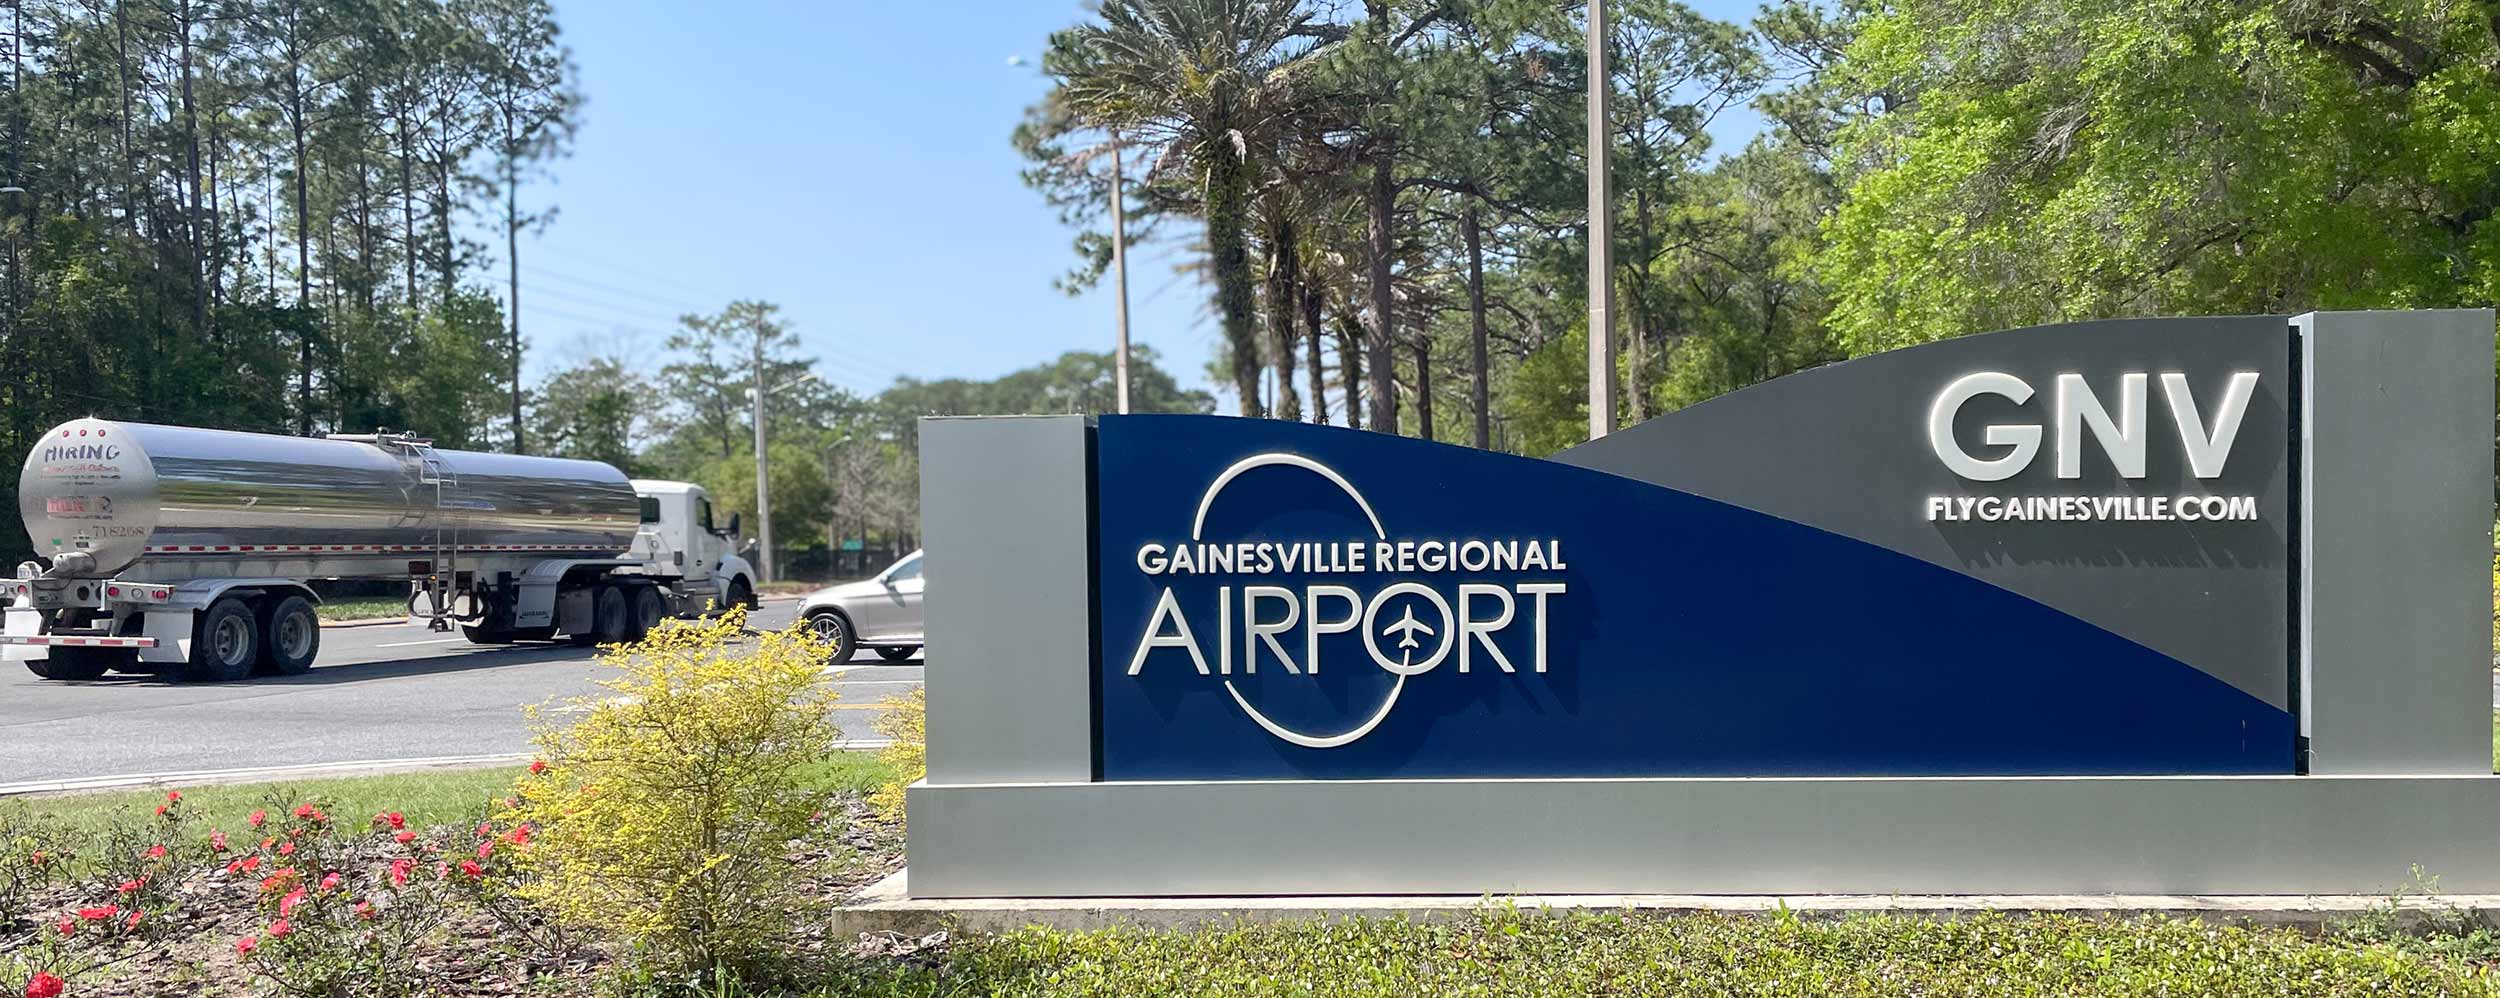 Gainesville Regional Airport Entrance Signage